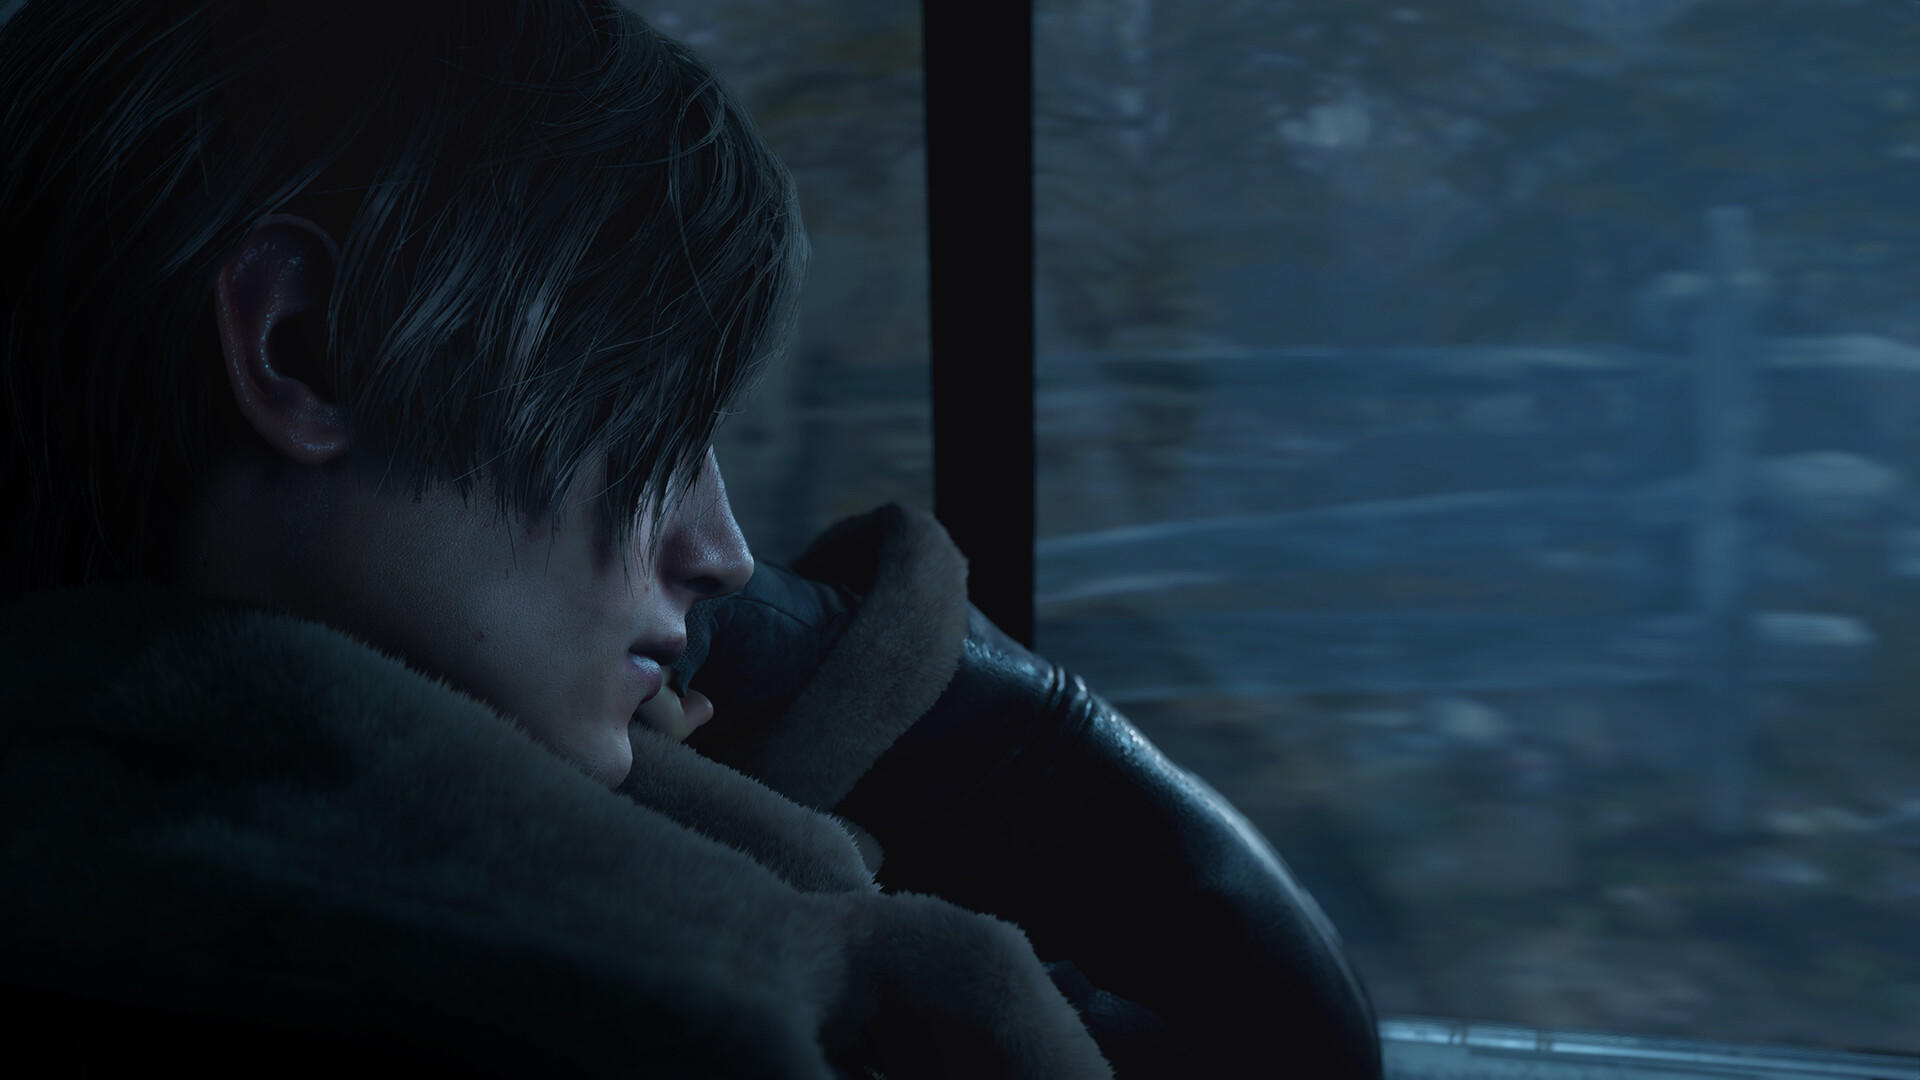 Resident Evil 4 Remake makes subtle but clever changes, Hands-on preview